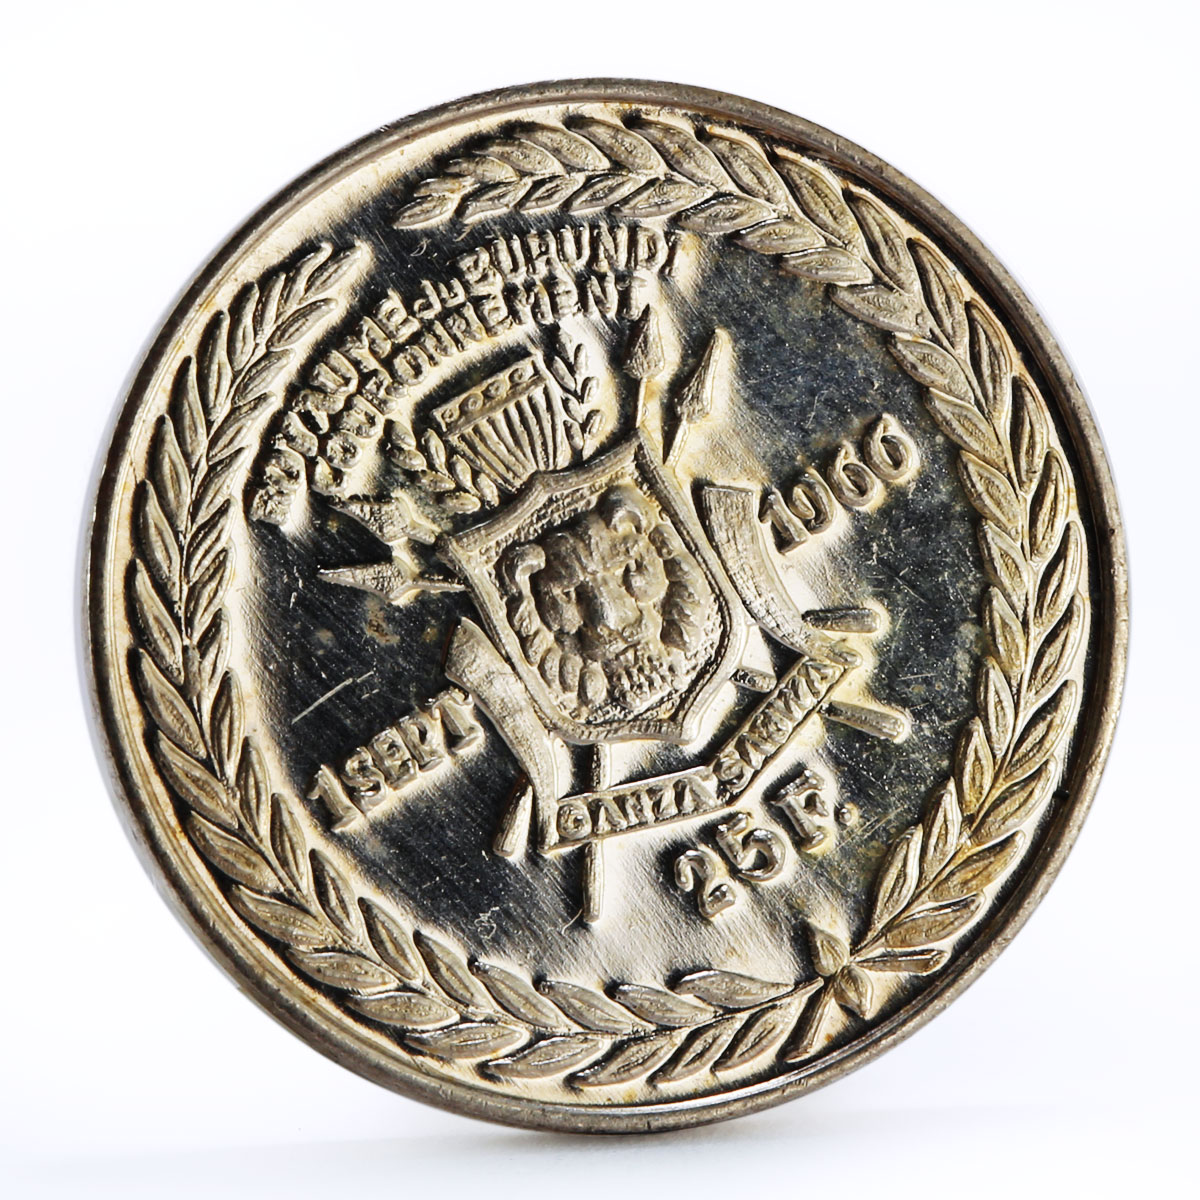 Burundi 25 francs 50th Anniversary of Sultan Mwambutsan's Reign silver coin 1966